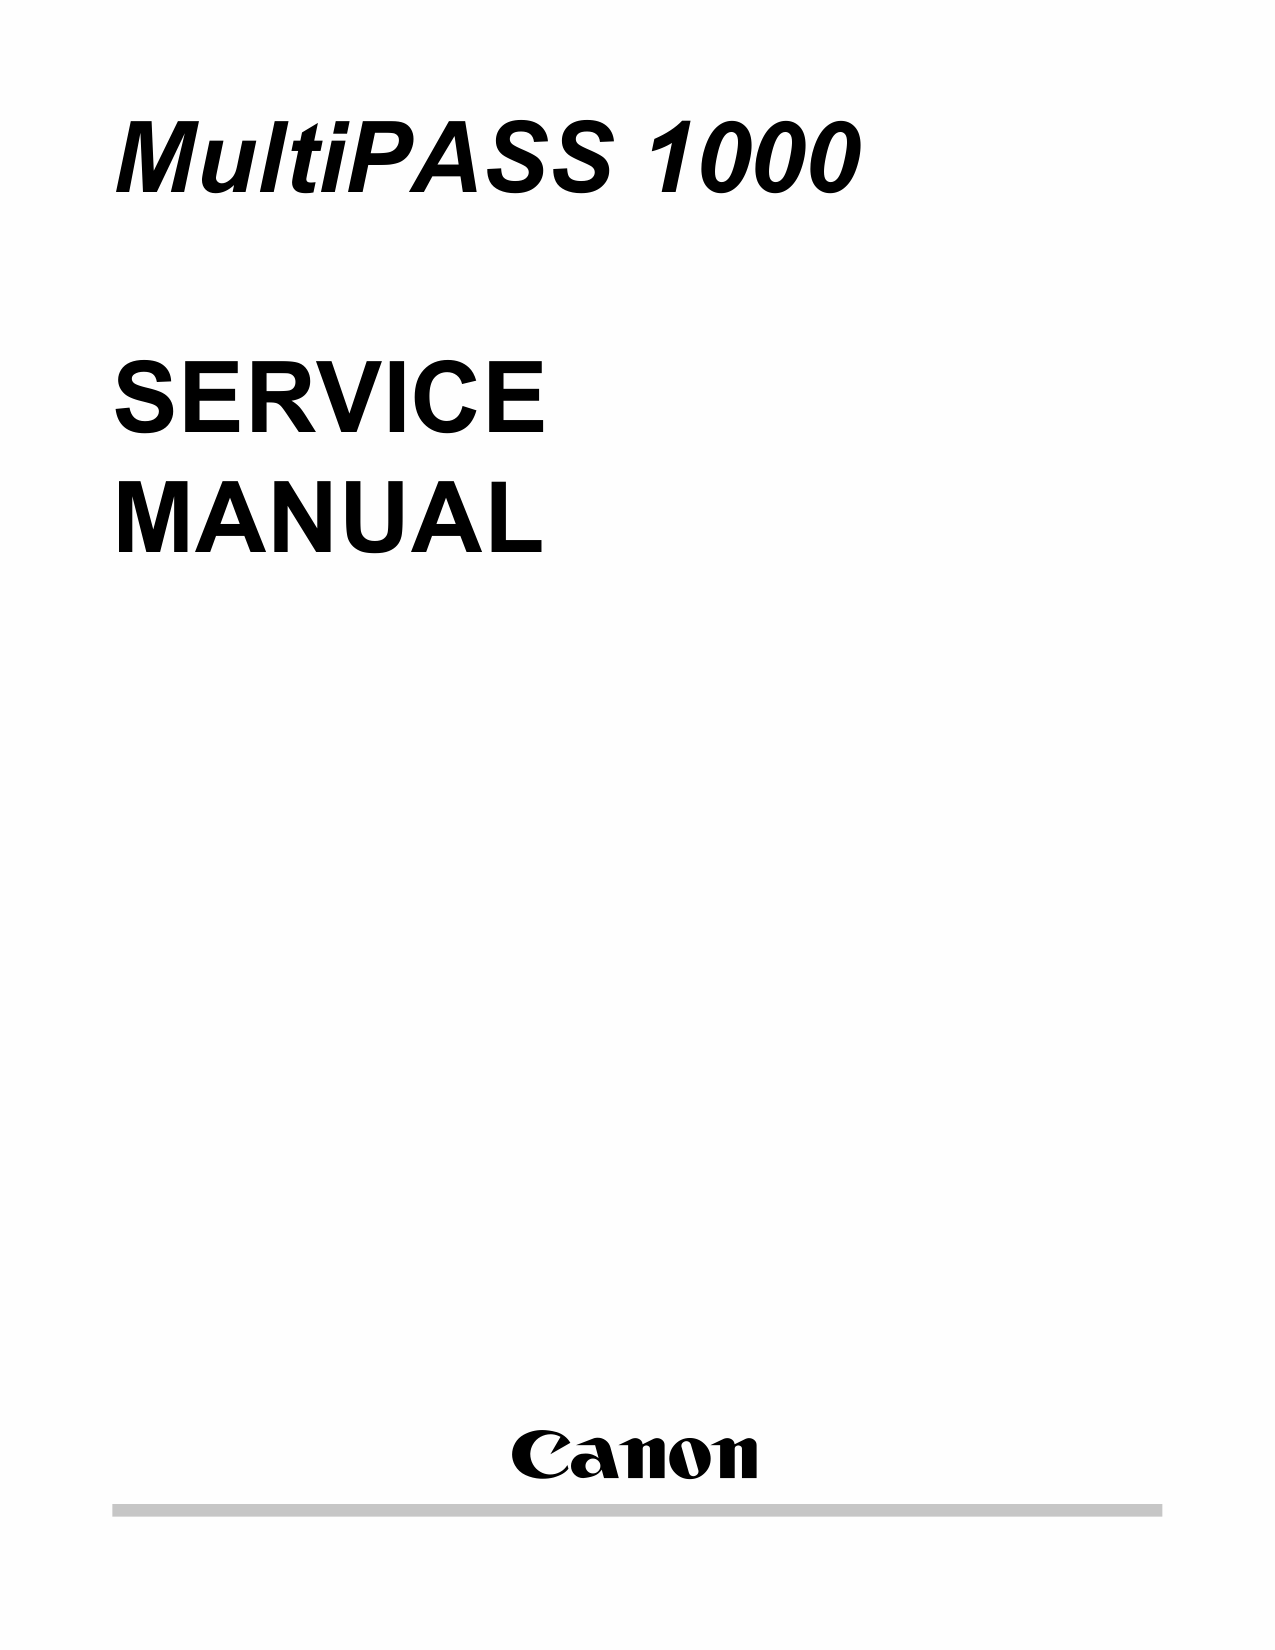 Canon MultiPASS MP-1000 Service Manual-1